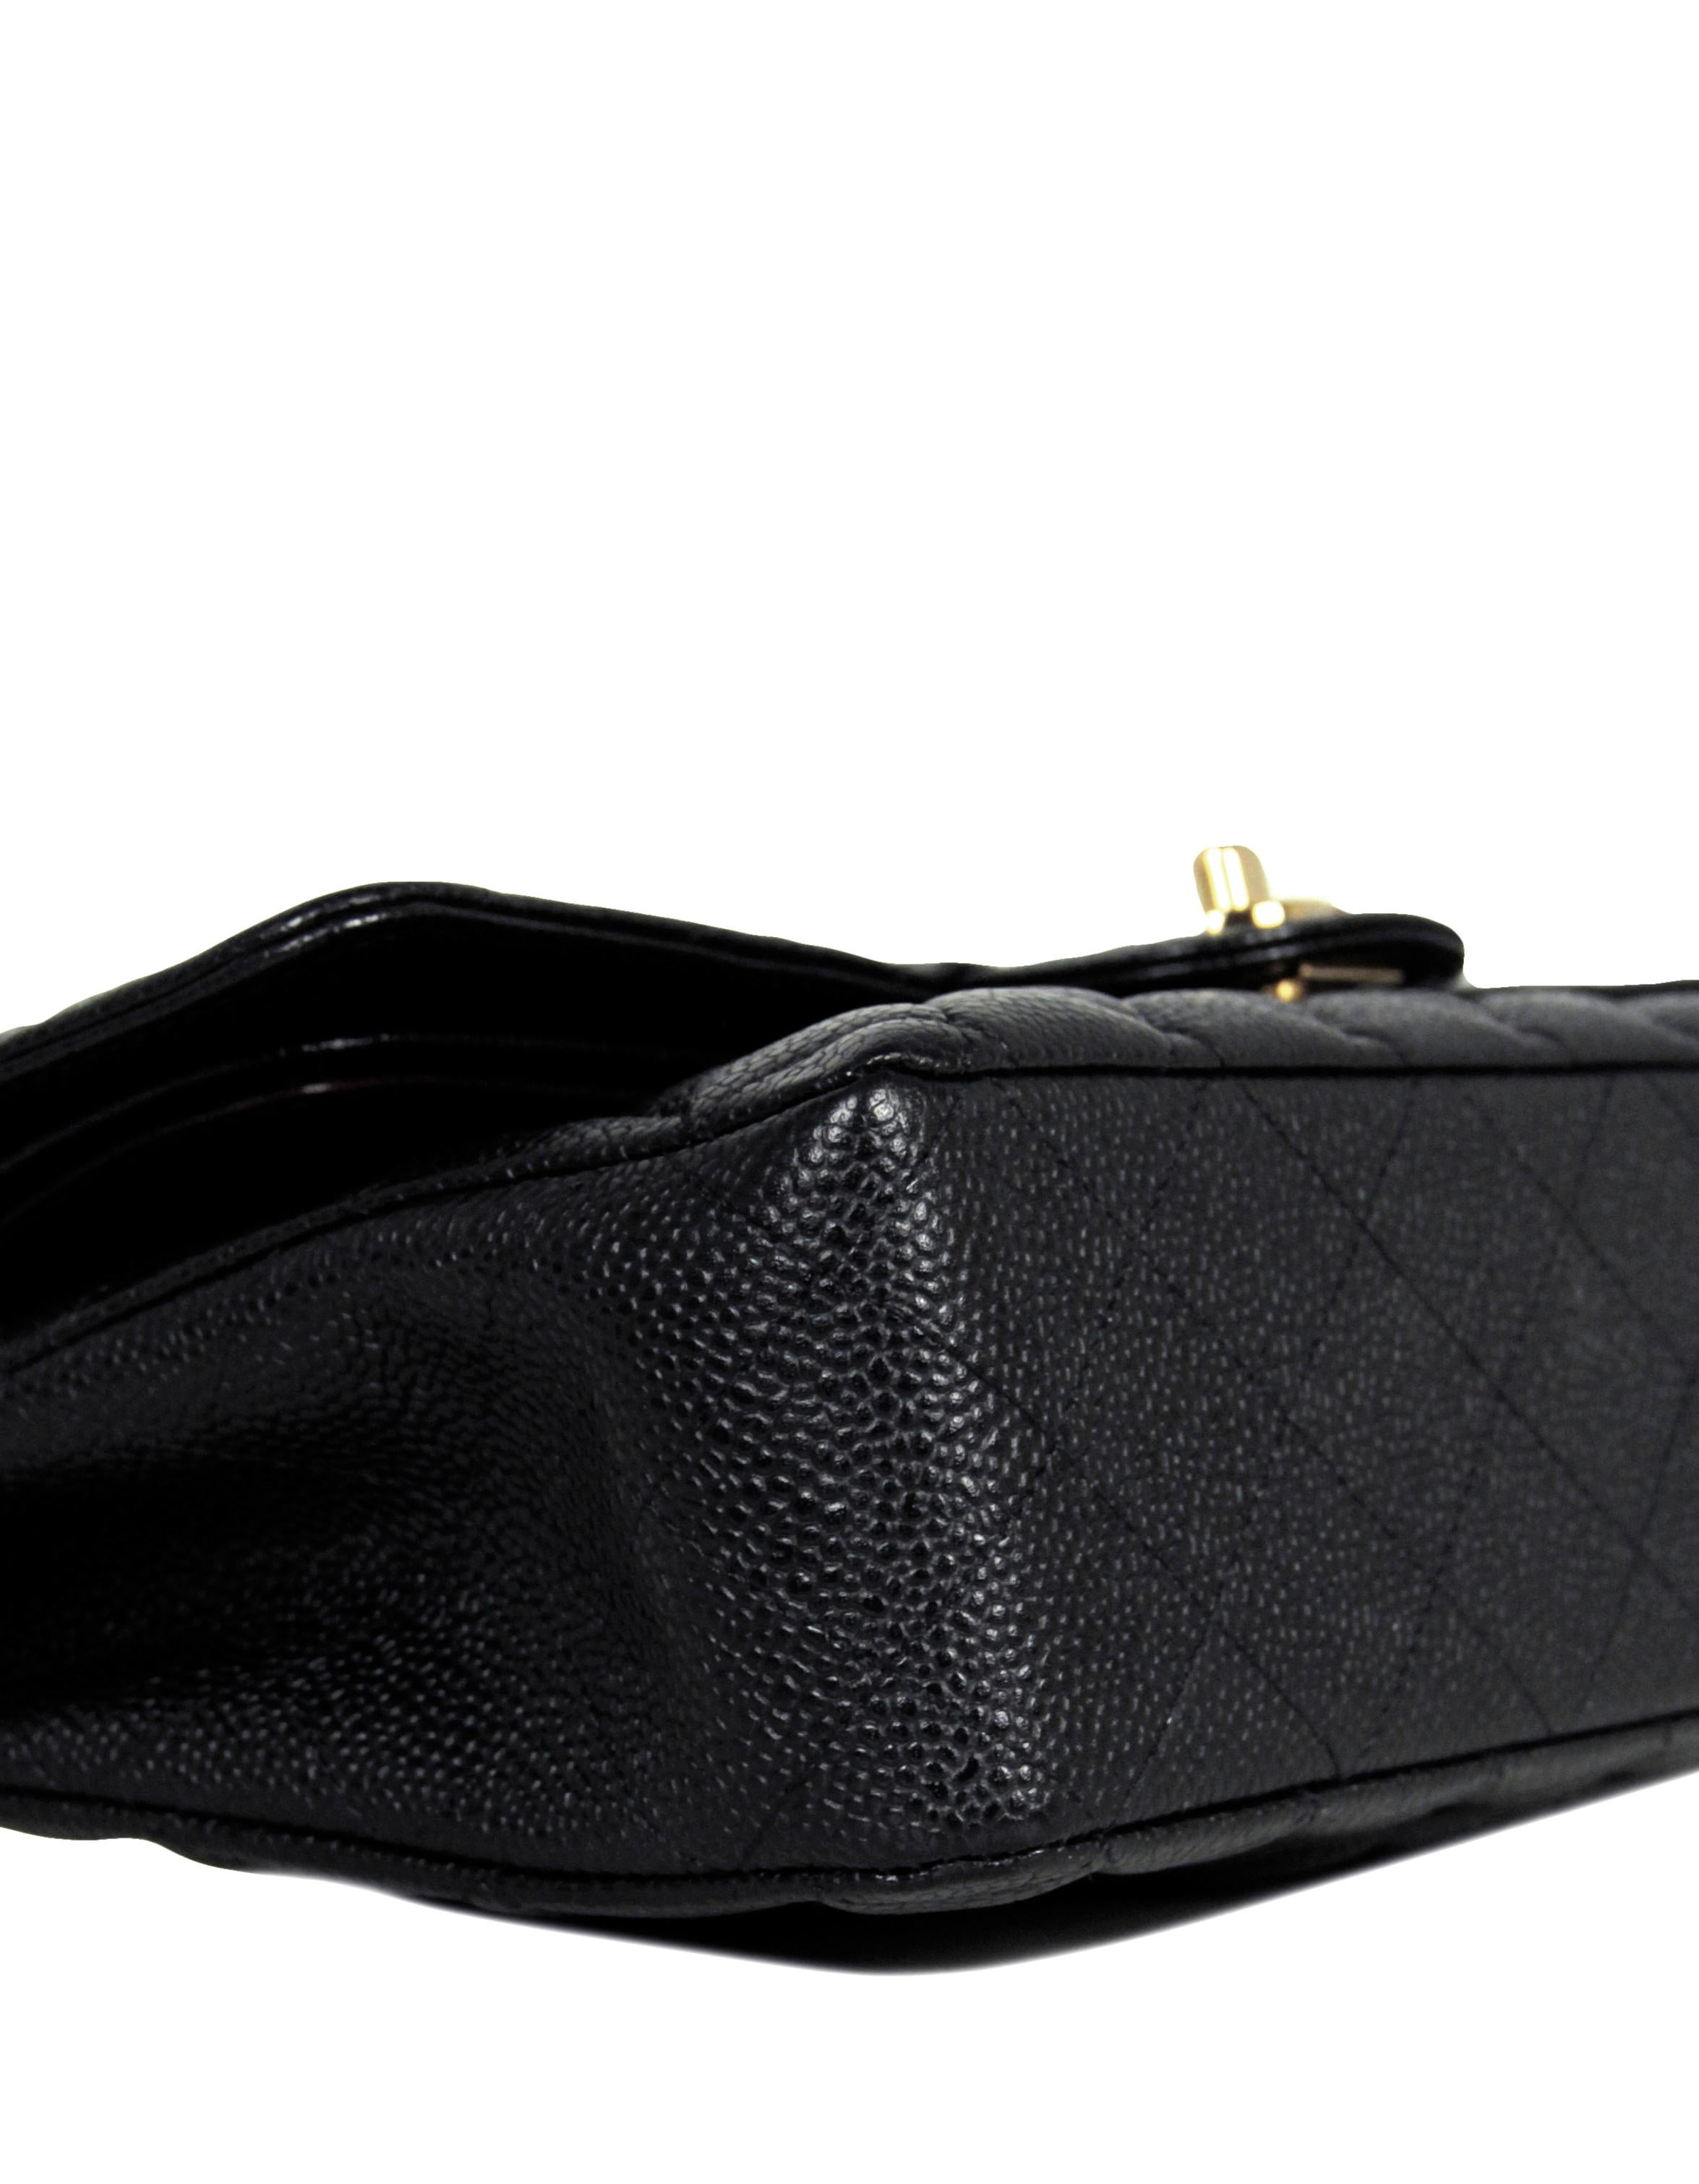 Chanel Black Caviar Leather 10